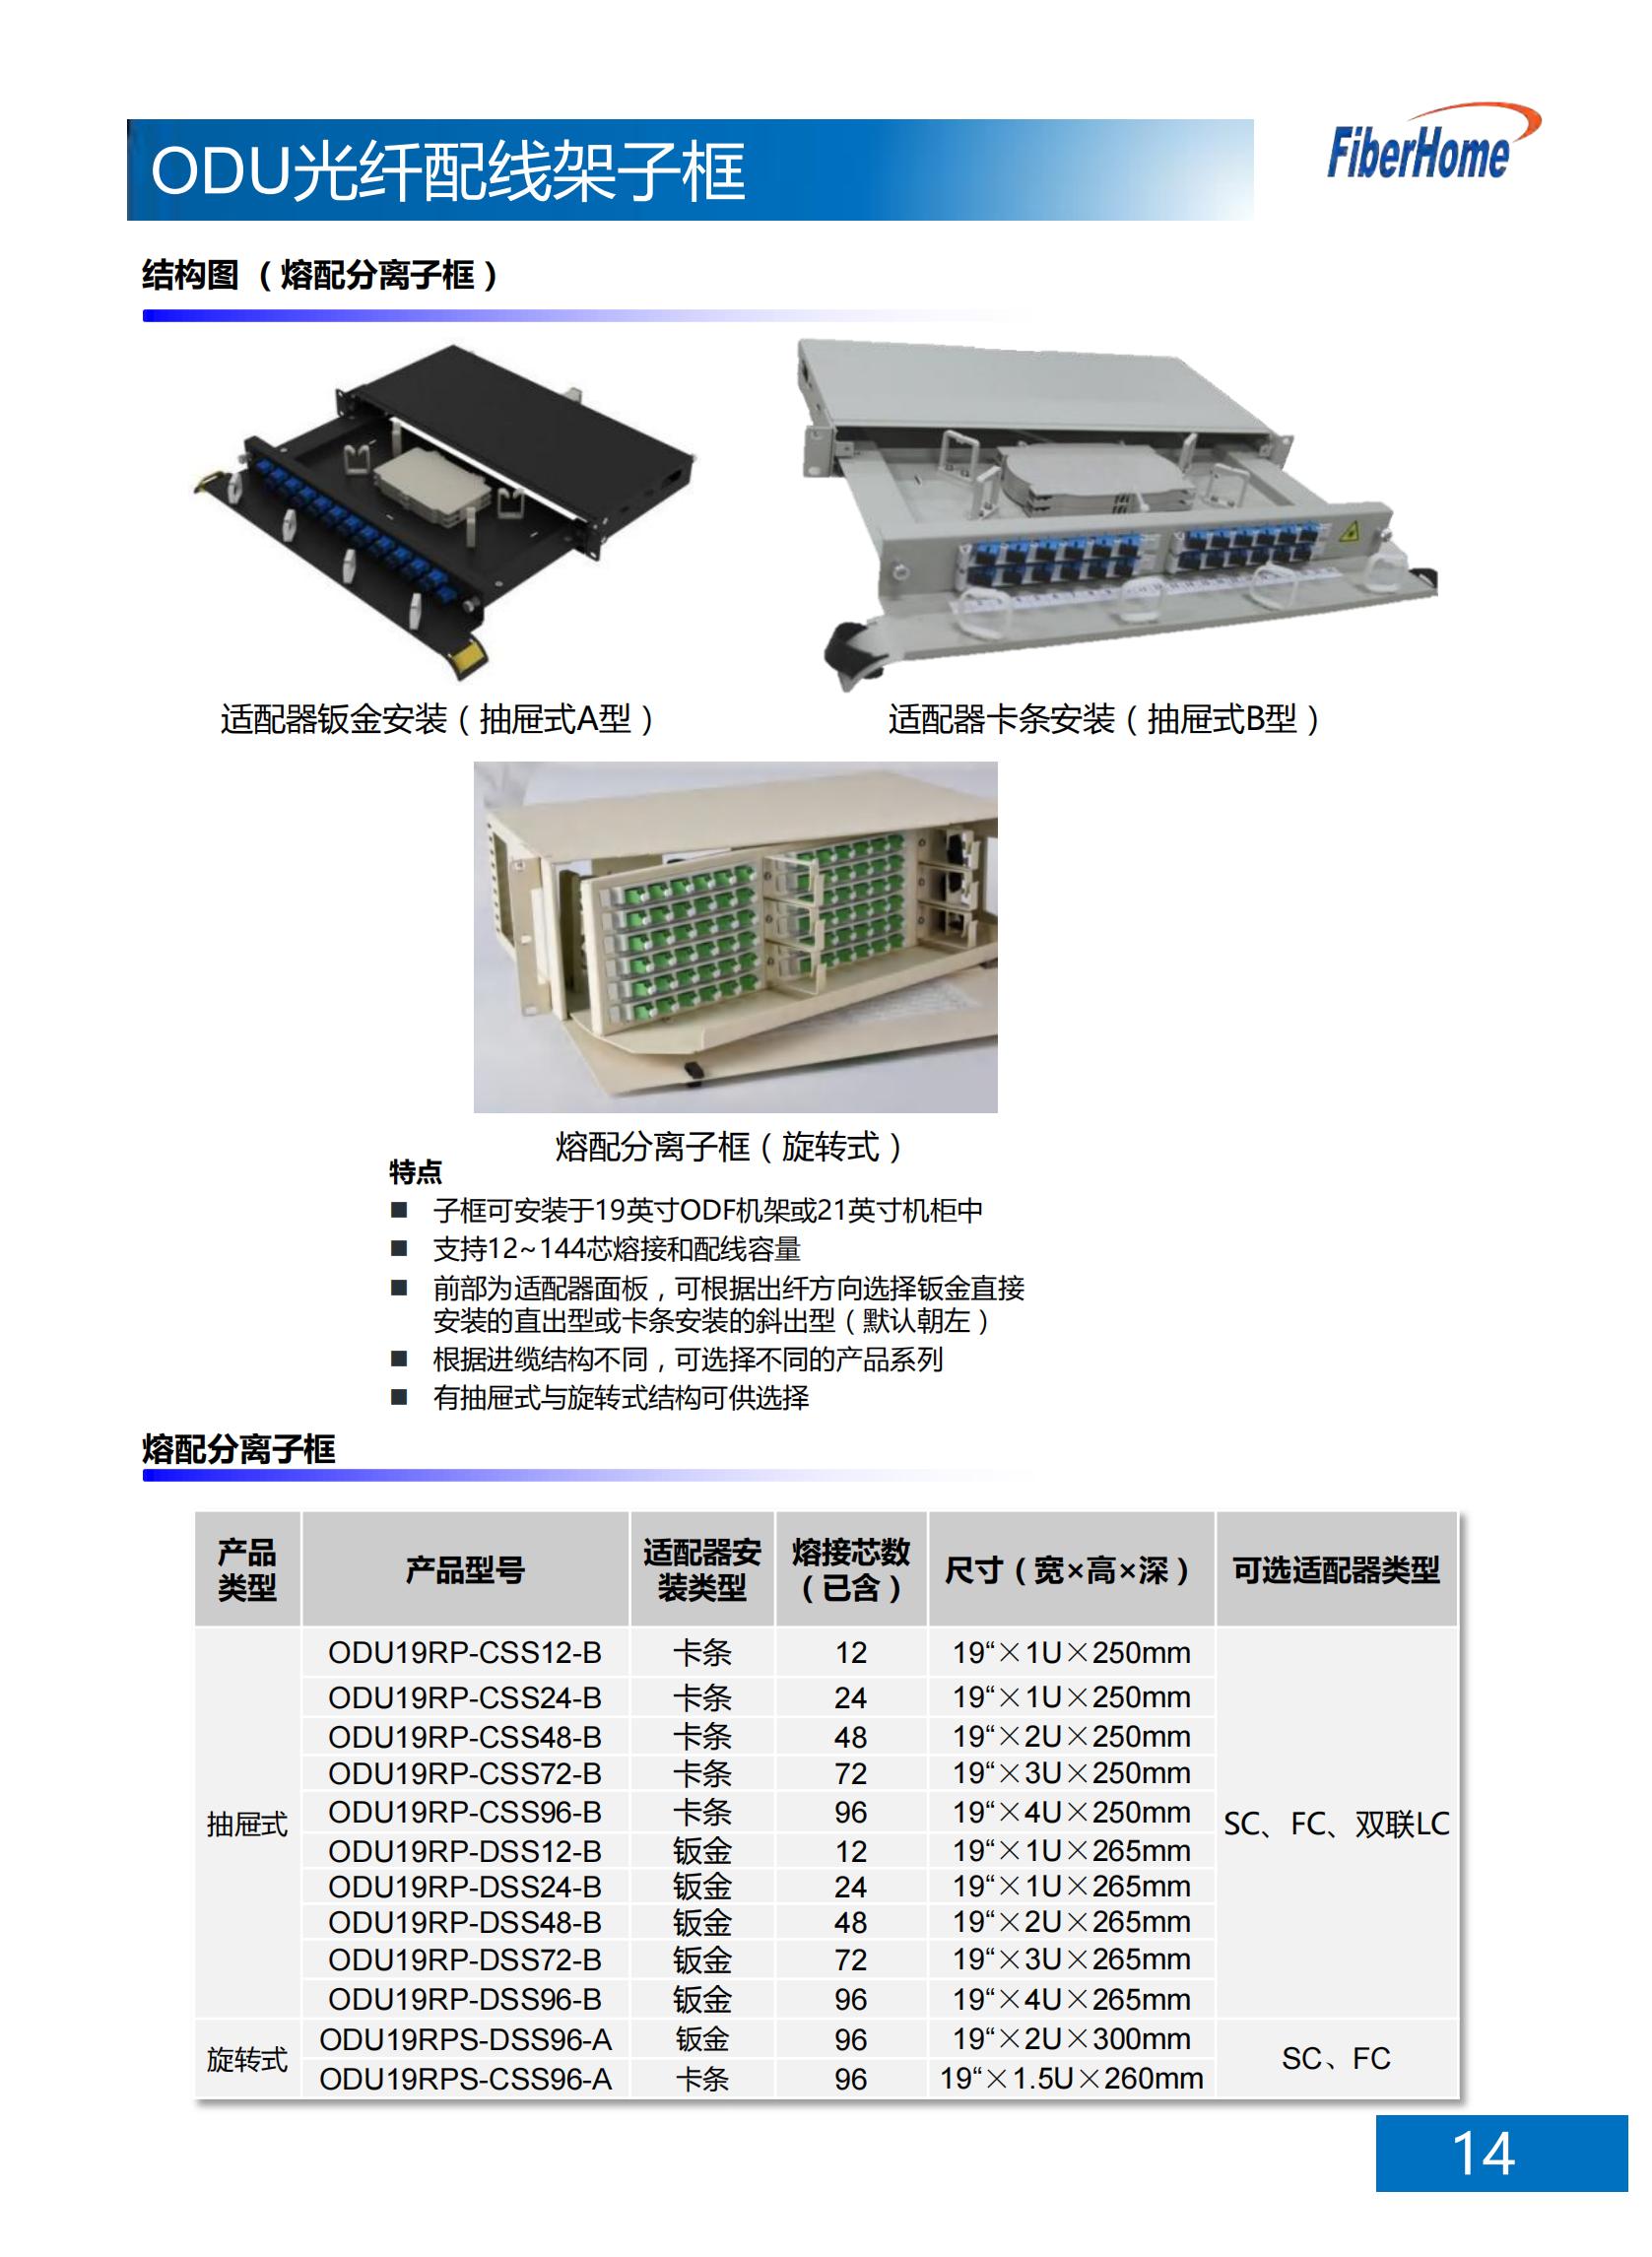 144-core ODU optical fiber distribution frame ODU19T-A1272-B-LC (including 24-core LC fusion integration unit*6)